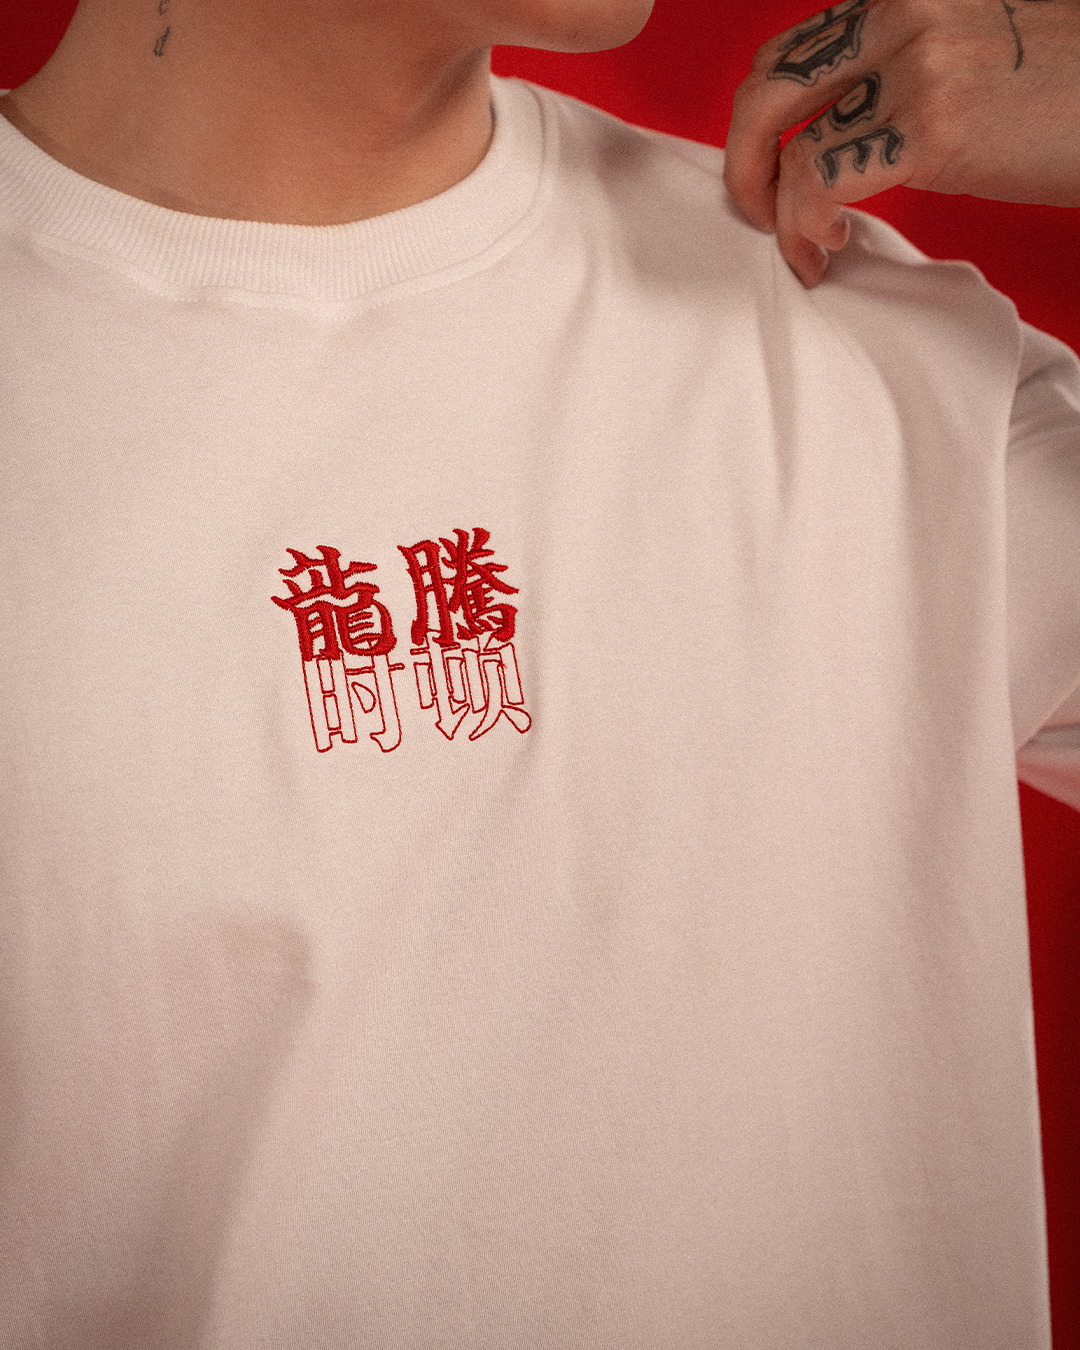 Stoned Rising Naga : Sky High T-Shirt White